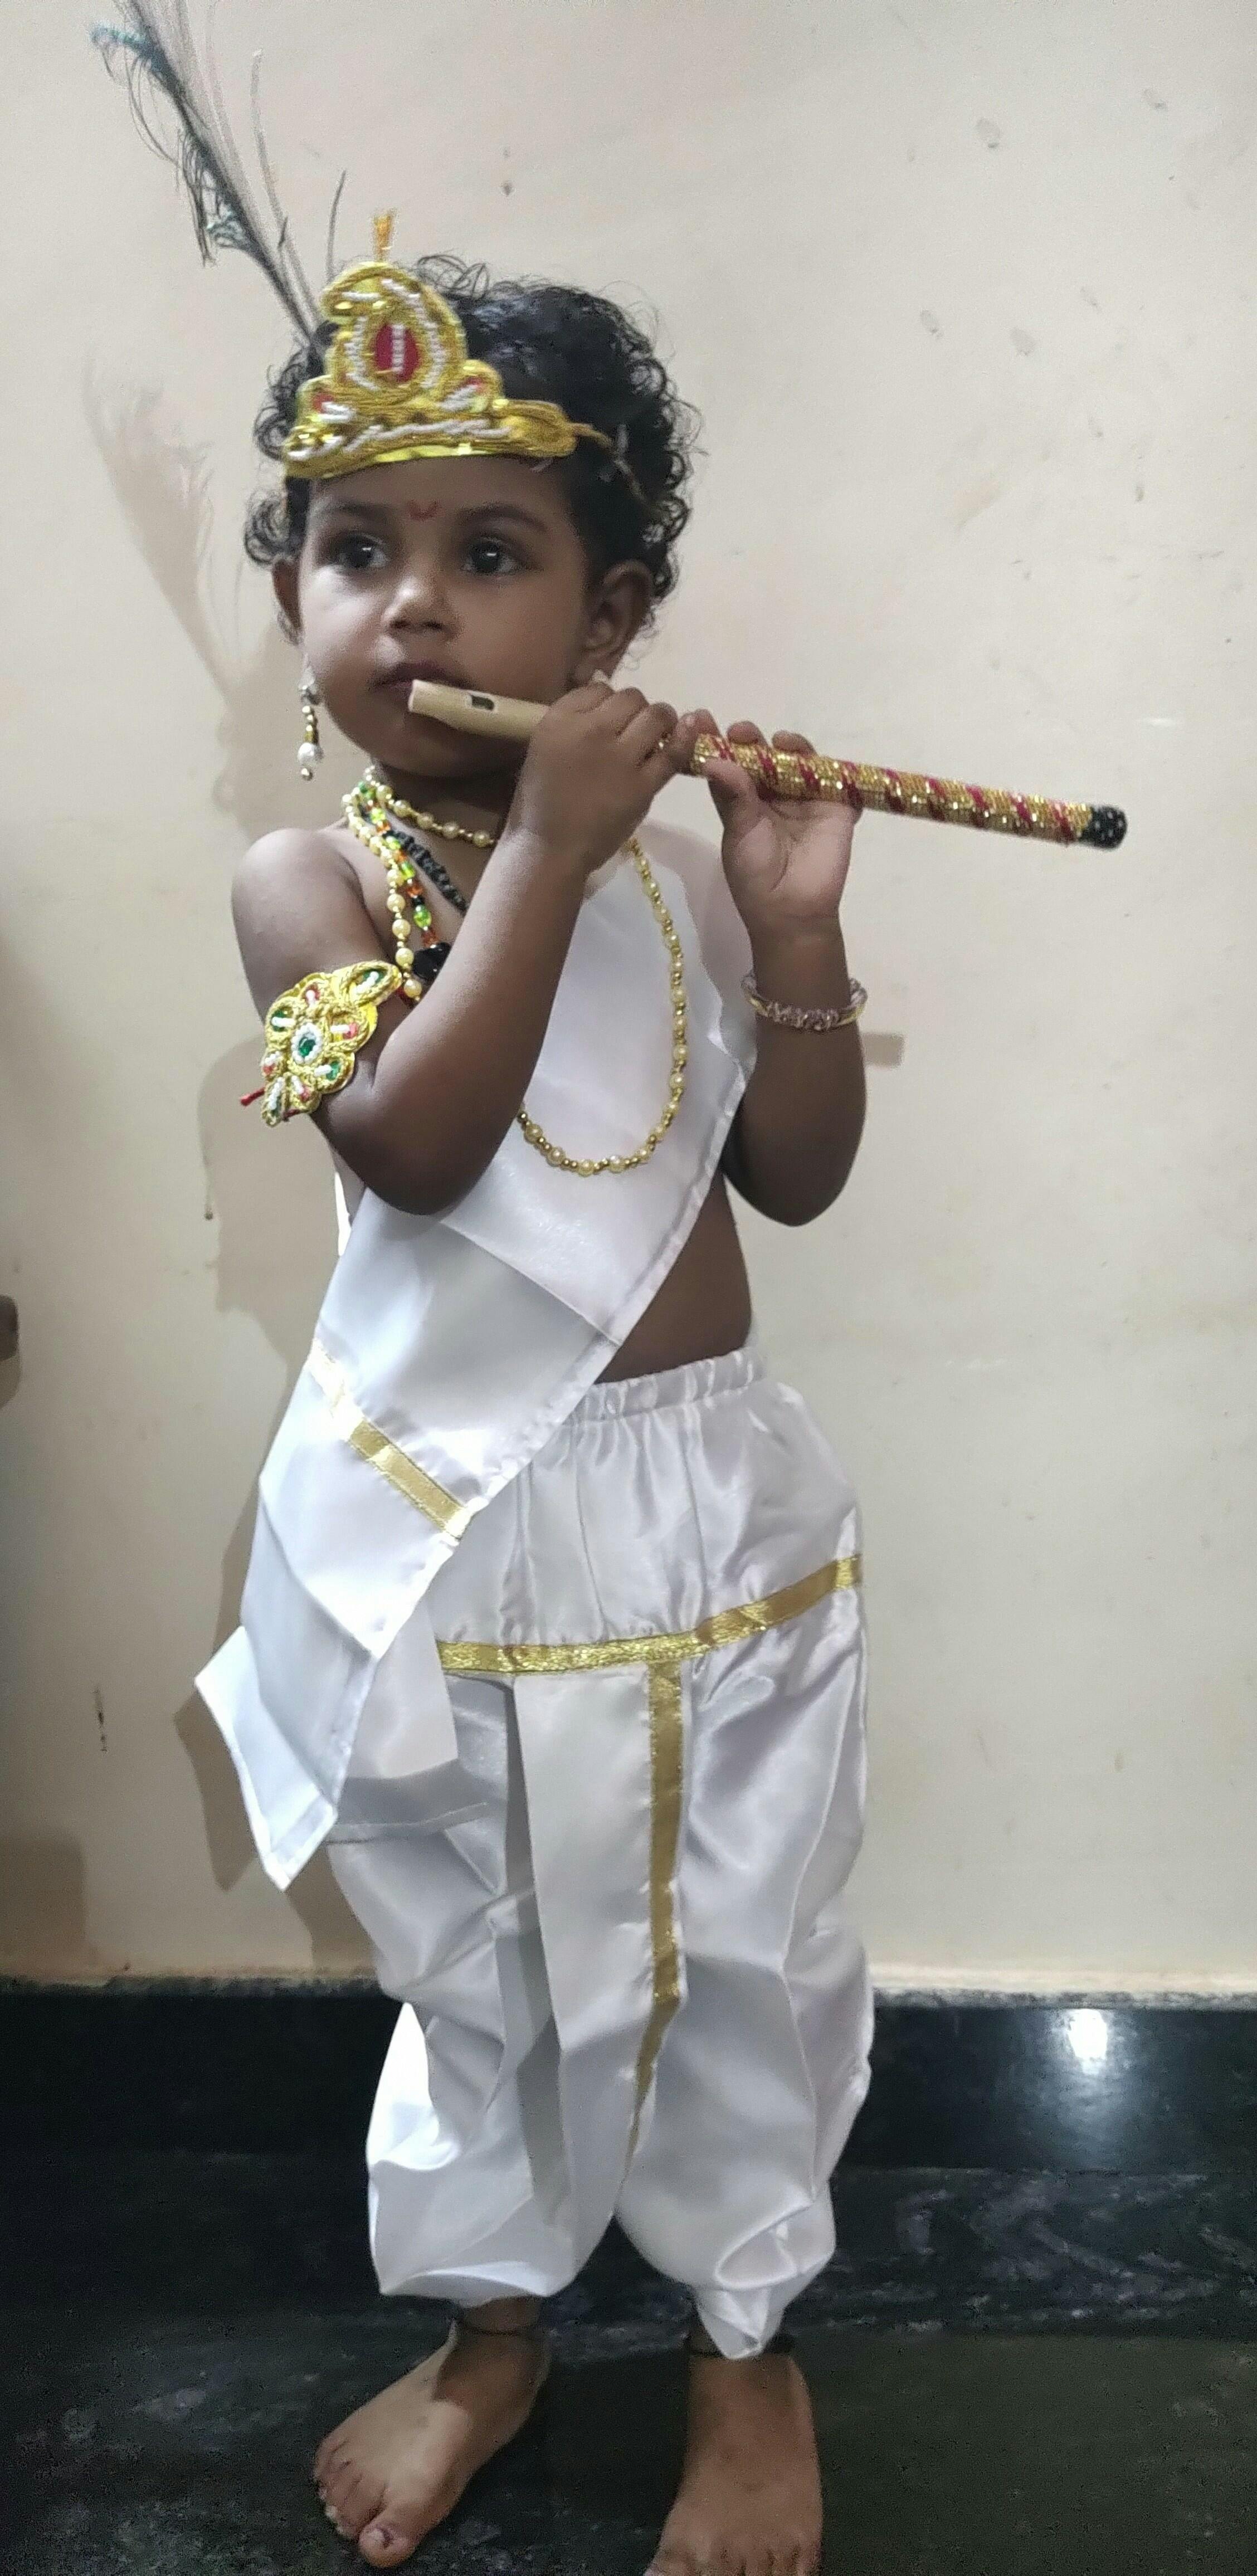 Buy Kaku Fancy Dresses Silk Polyester Krishna Costume for Boy/Janmashtami/Bal  Gopal Dress/Kanha Costume/Bal Krishna/Mythological Costume for Boy -  Yellow-Red, 1-2 Years Online at Low Prices in India - Amazon.in